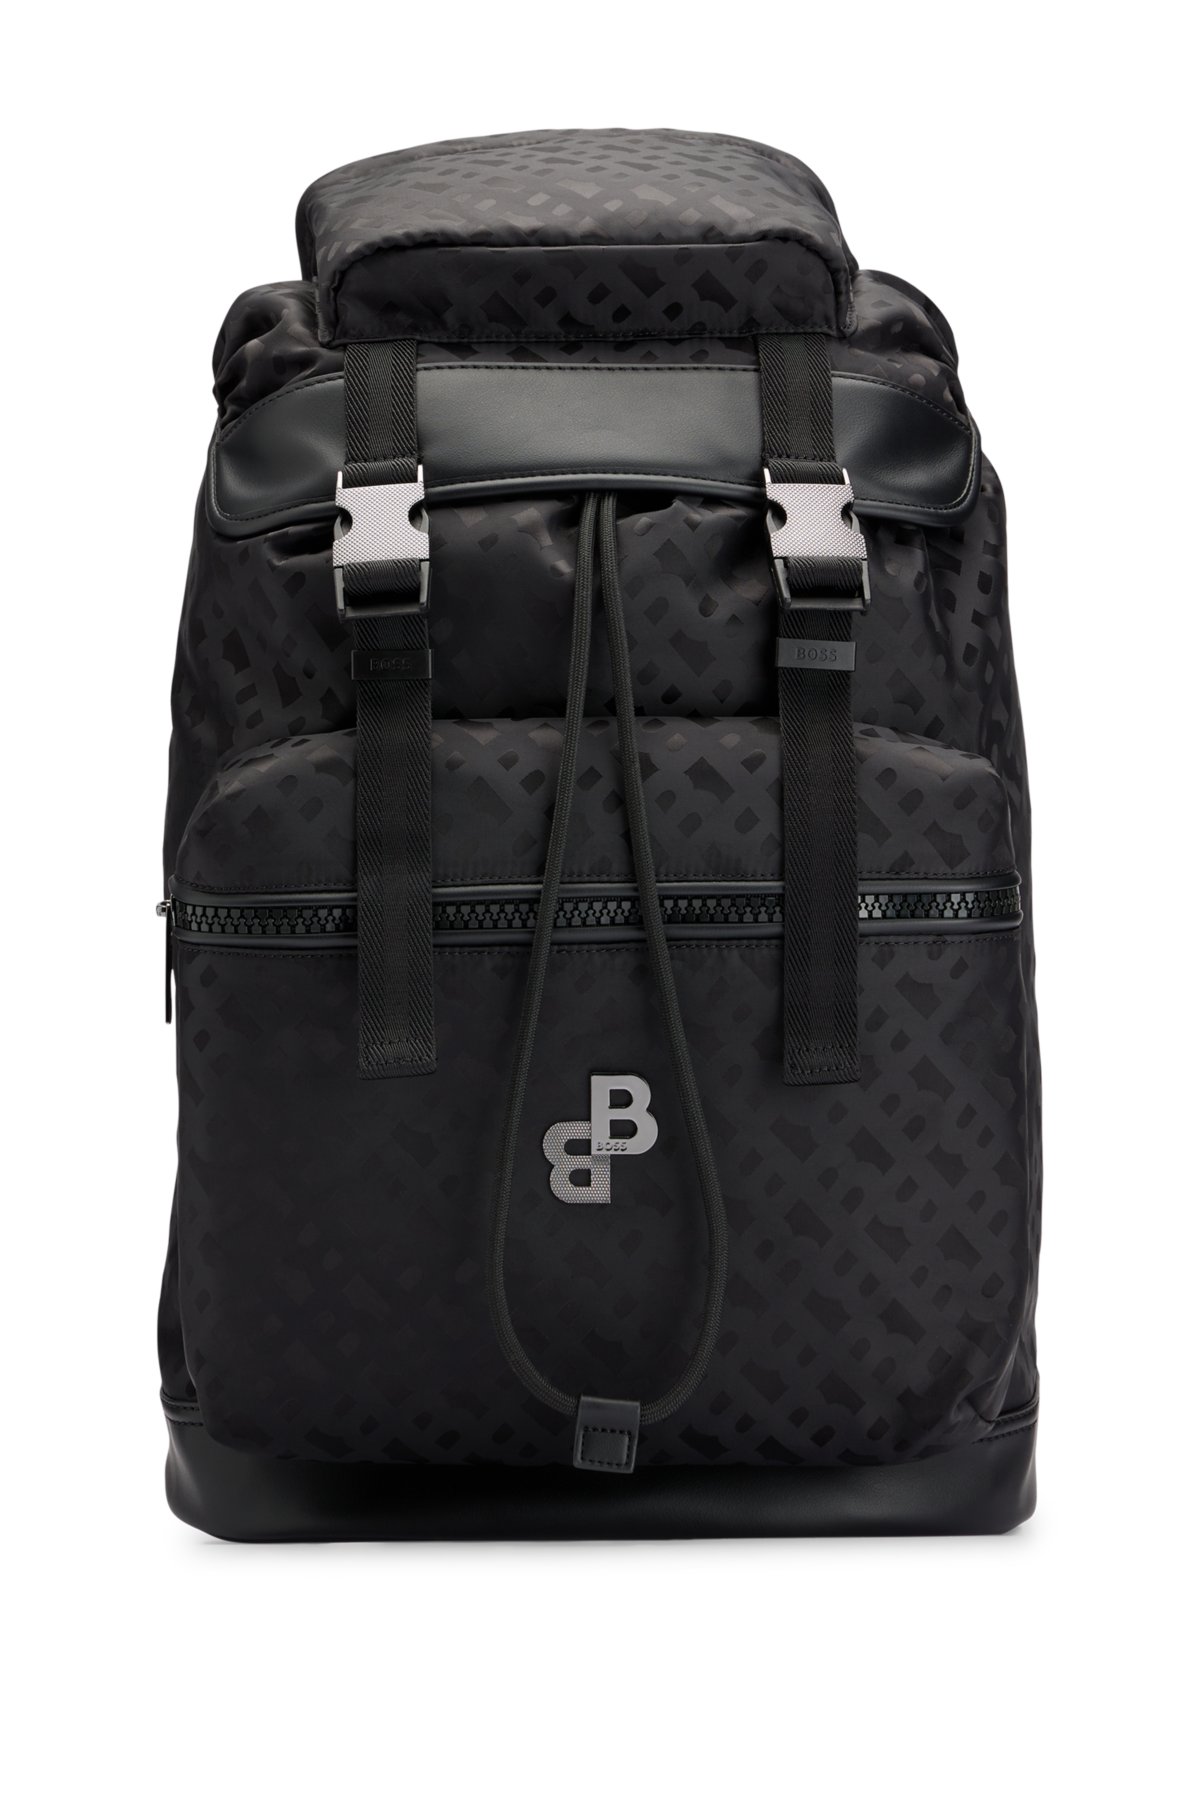 Backpack with Full Lining and Monogram details- Black | Men's Backpacks